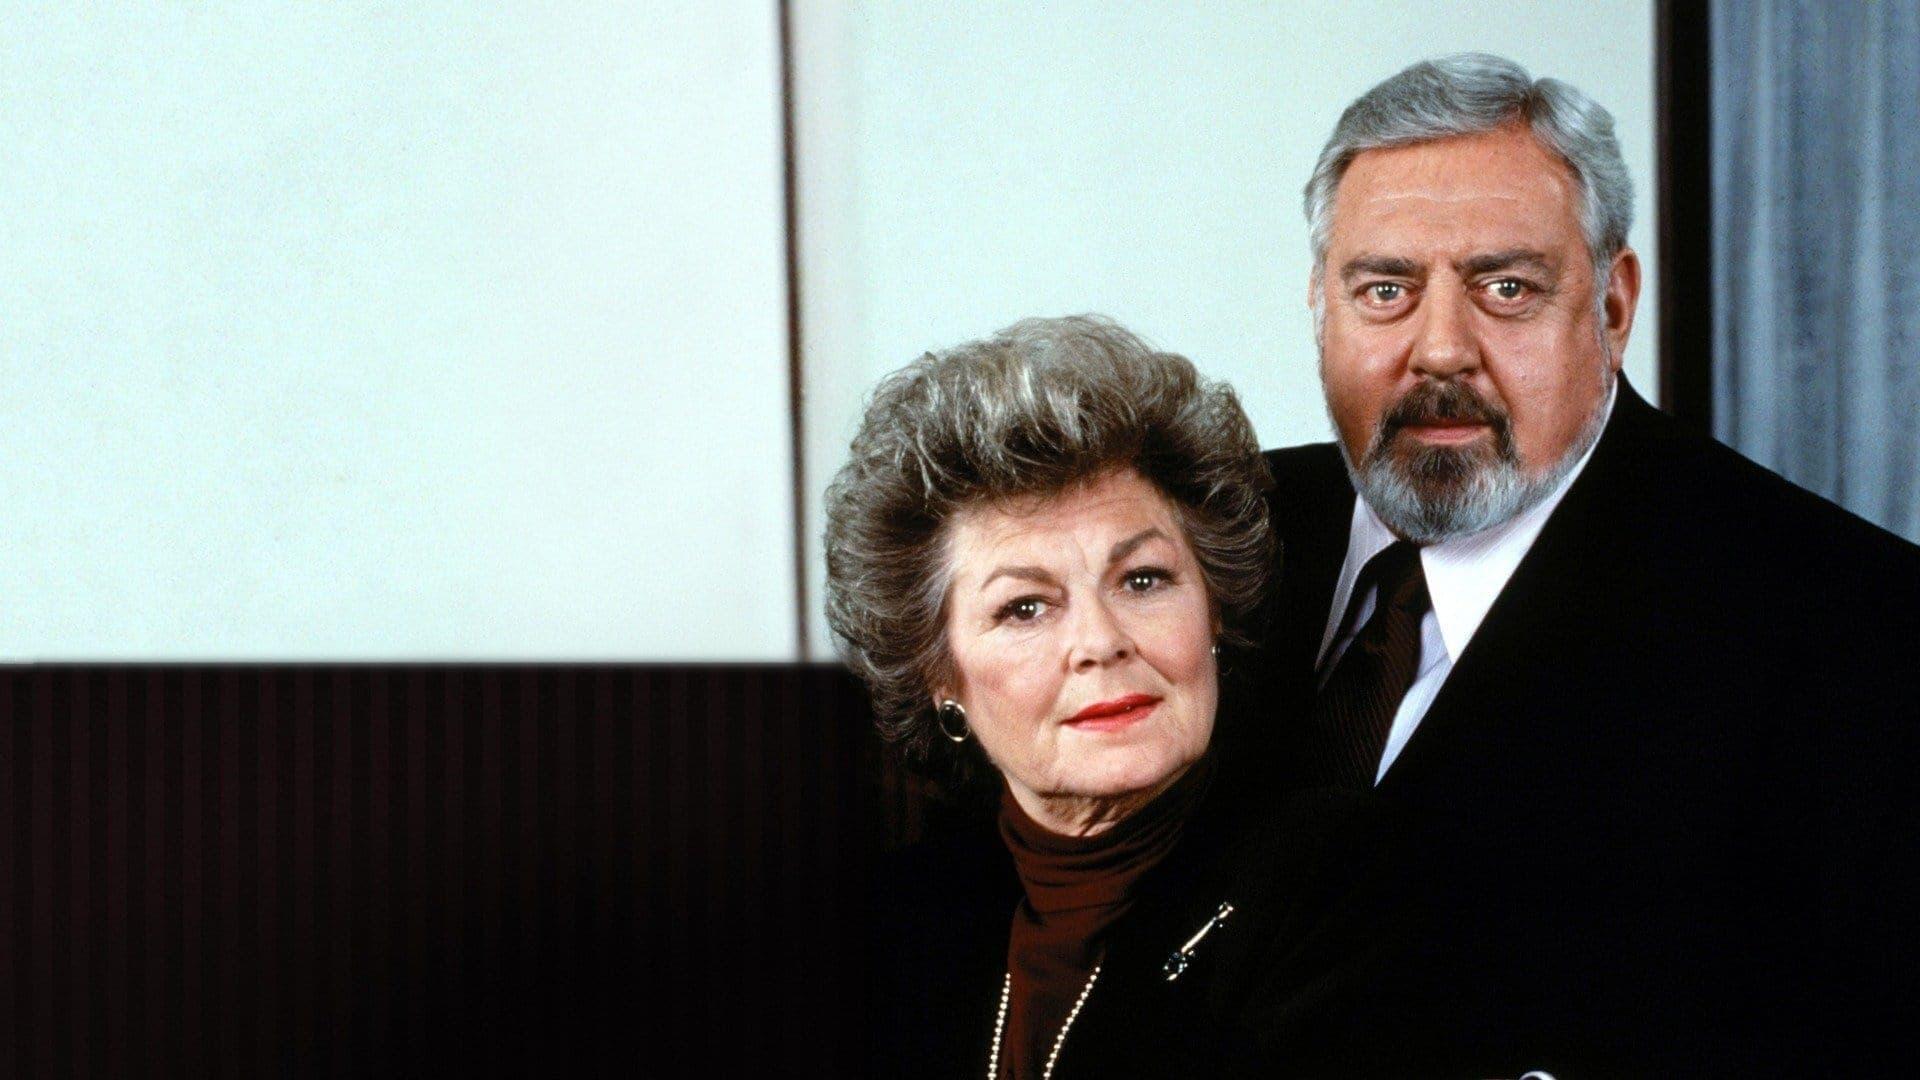 Perry Mason: The Case of the Scandalous Scoundrel backdrop